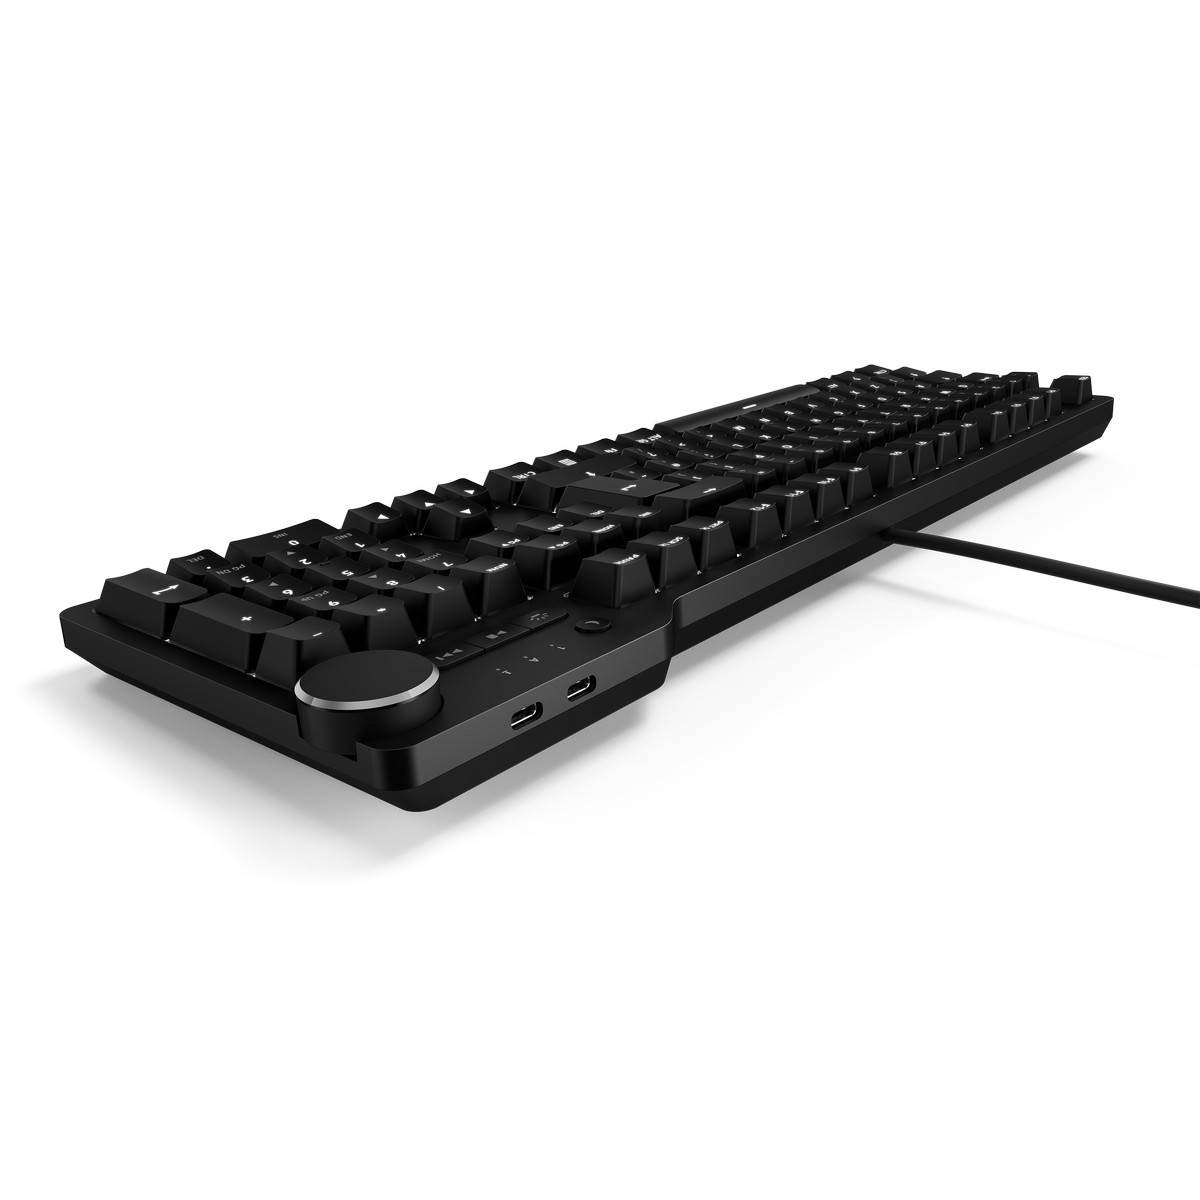 Das Keyboard - Das Keyboard Pro 6 Mechanical Gaming Keyboard Cherry MX Brown UK Layout (DK6ABSLEDMXBUKX)